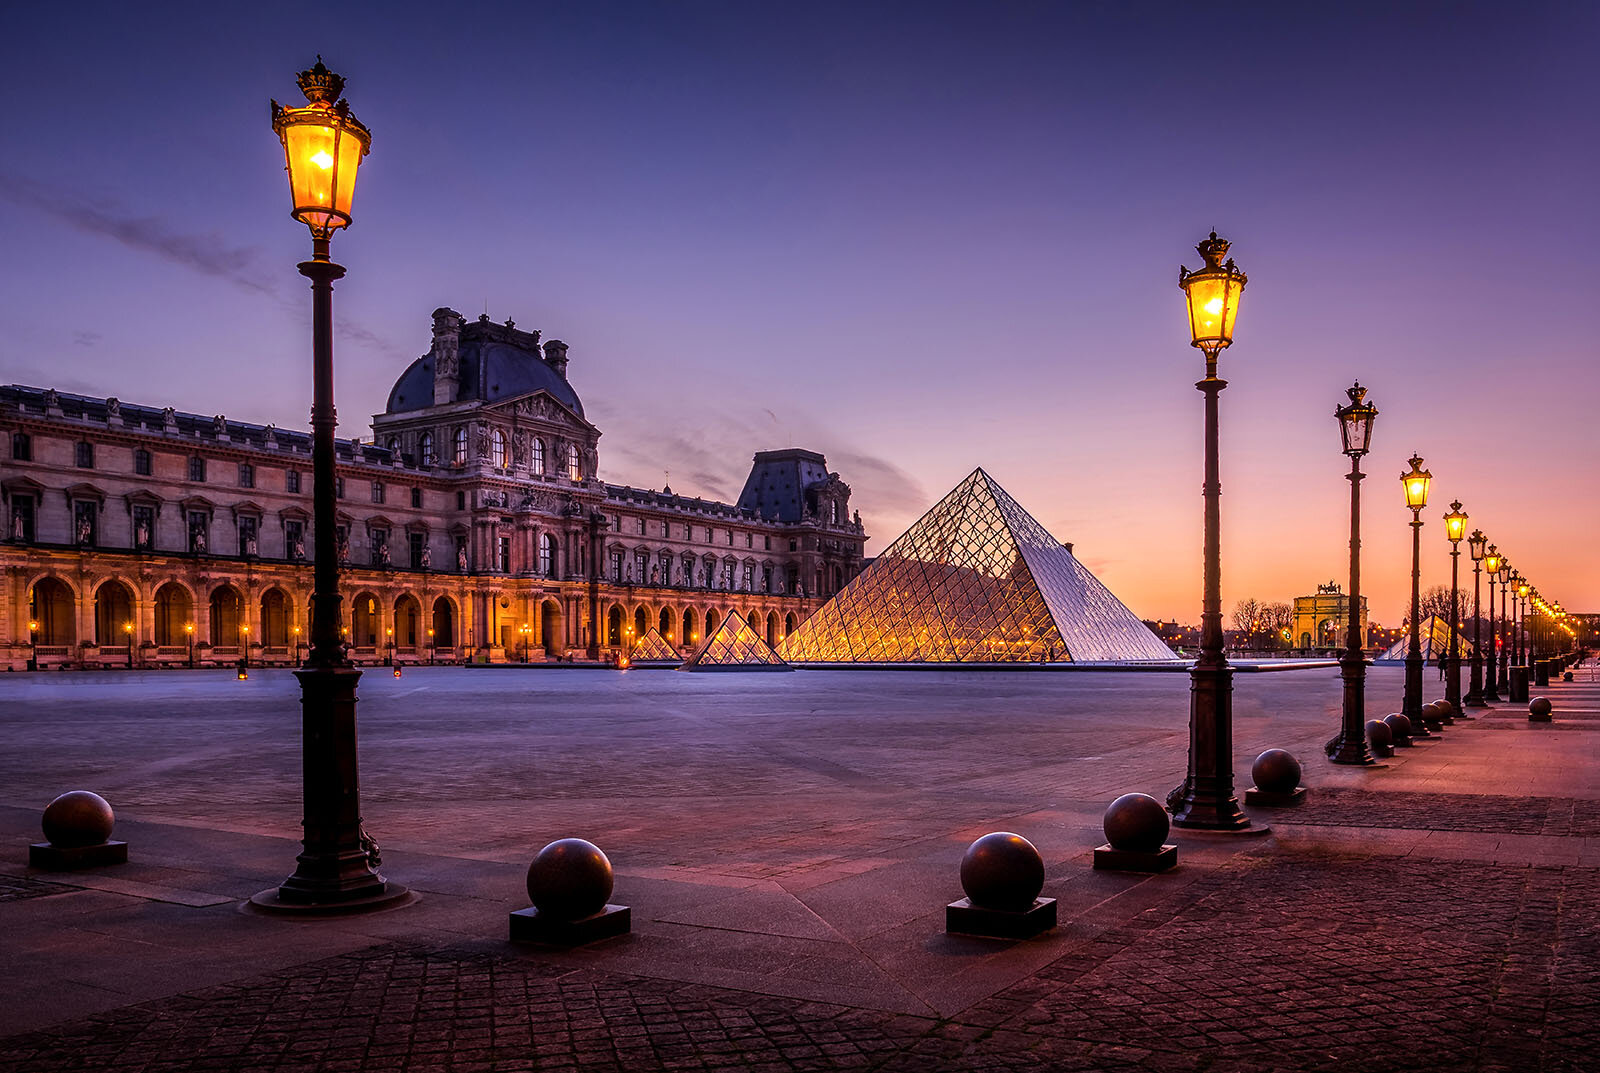 paris-the-louvre-photo-sunset-best-romantic-wallpaper-download-by-anton-alymov.jpg